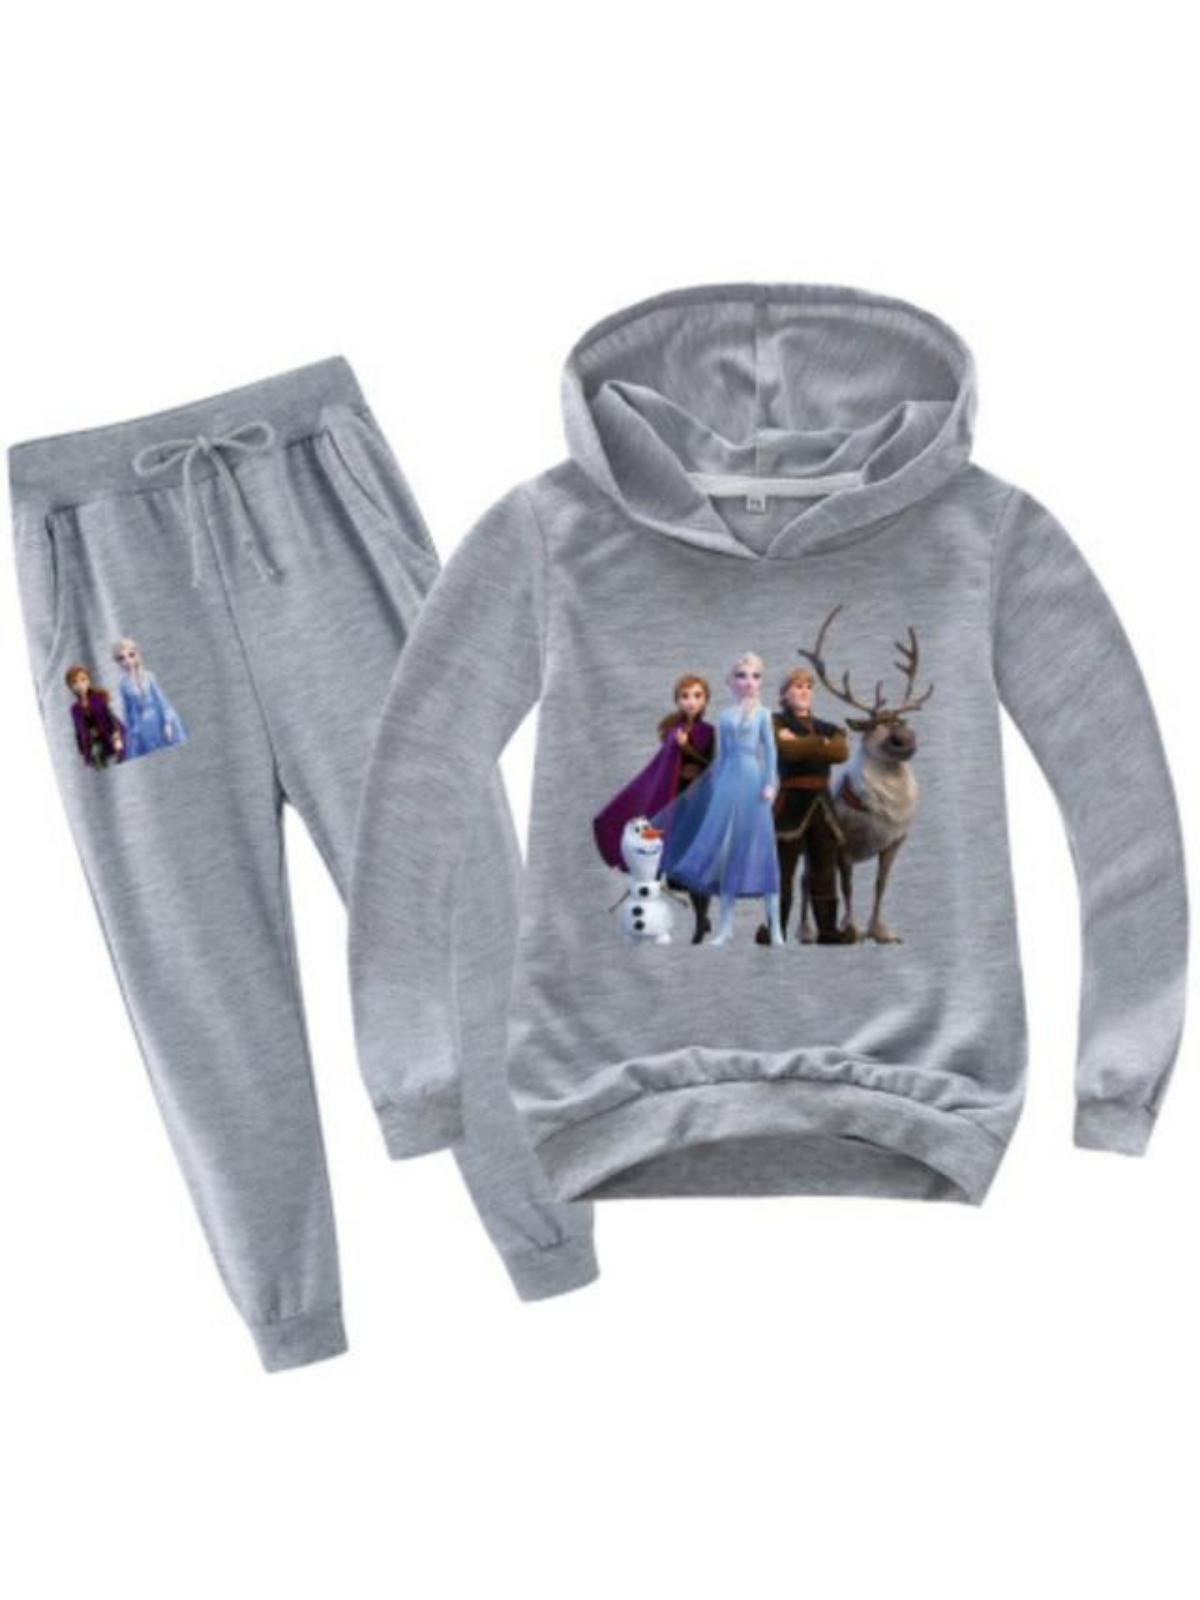 girls-frozen-hoodie-joggers-tracksuit-gray